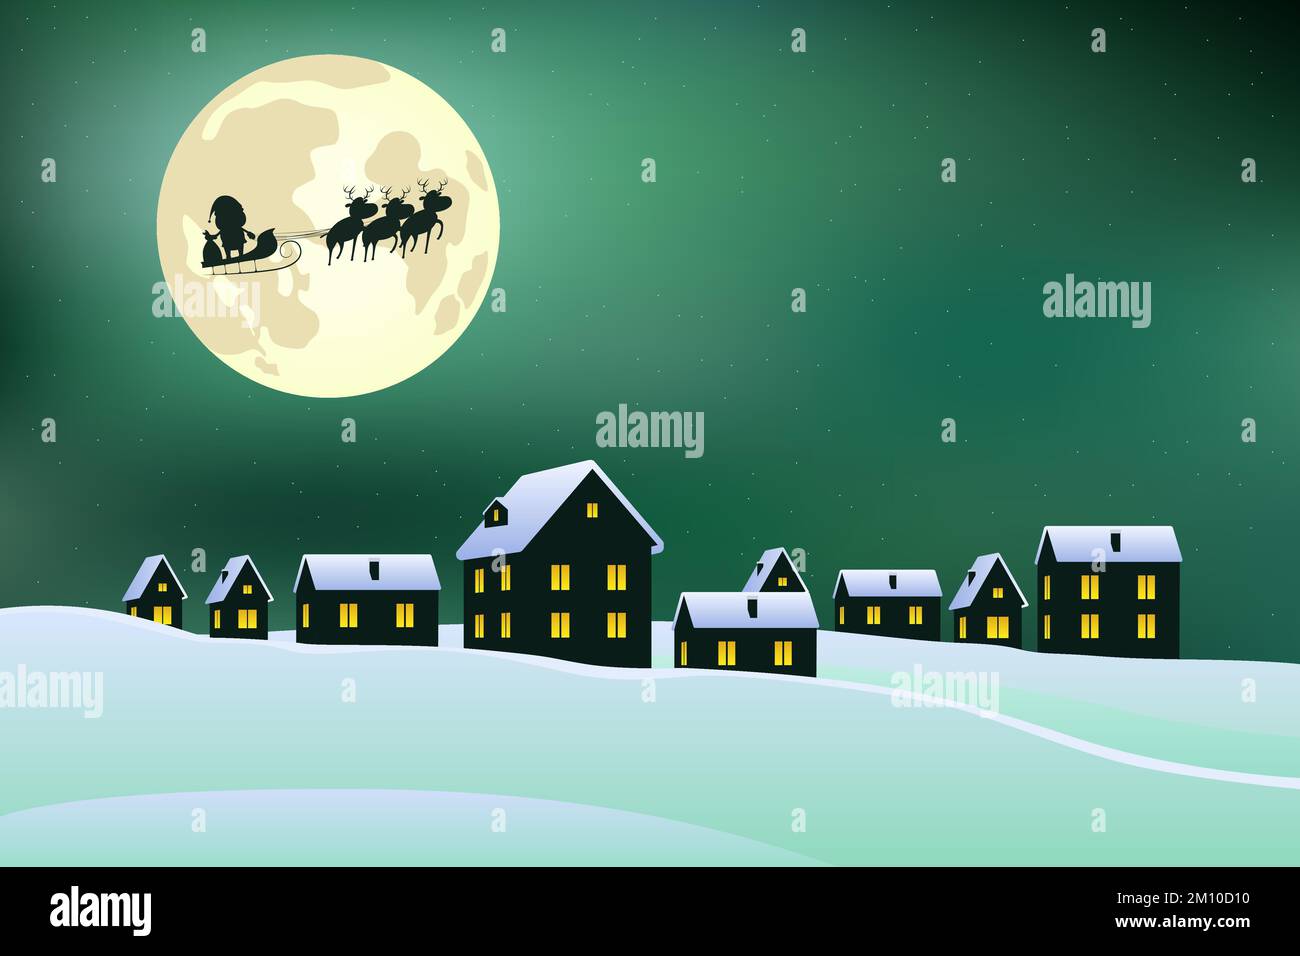 Santa Claus flying on reindeer sledge. Vector illustration. Stock Vector